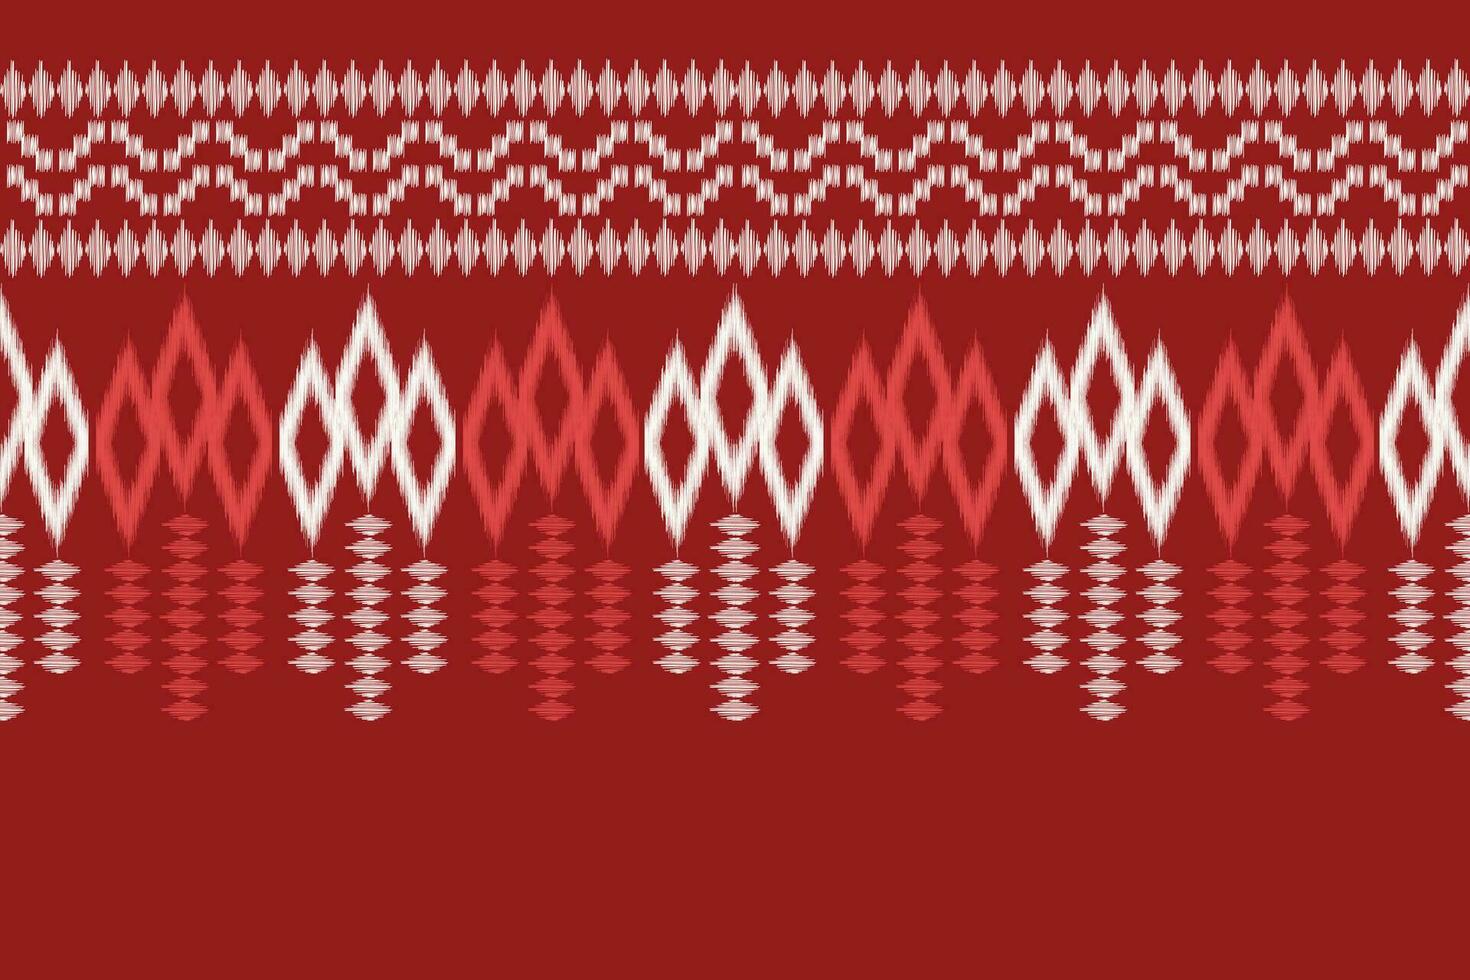 etnisk ikat tyg mönster geometrisk stil.afrikansk ikat broderi etnisk orientalisk mönster röd bakgrund. abstrakt, vektor, illustration.textur, kläder, ram, dekoration, matta, motiv. vektor